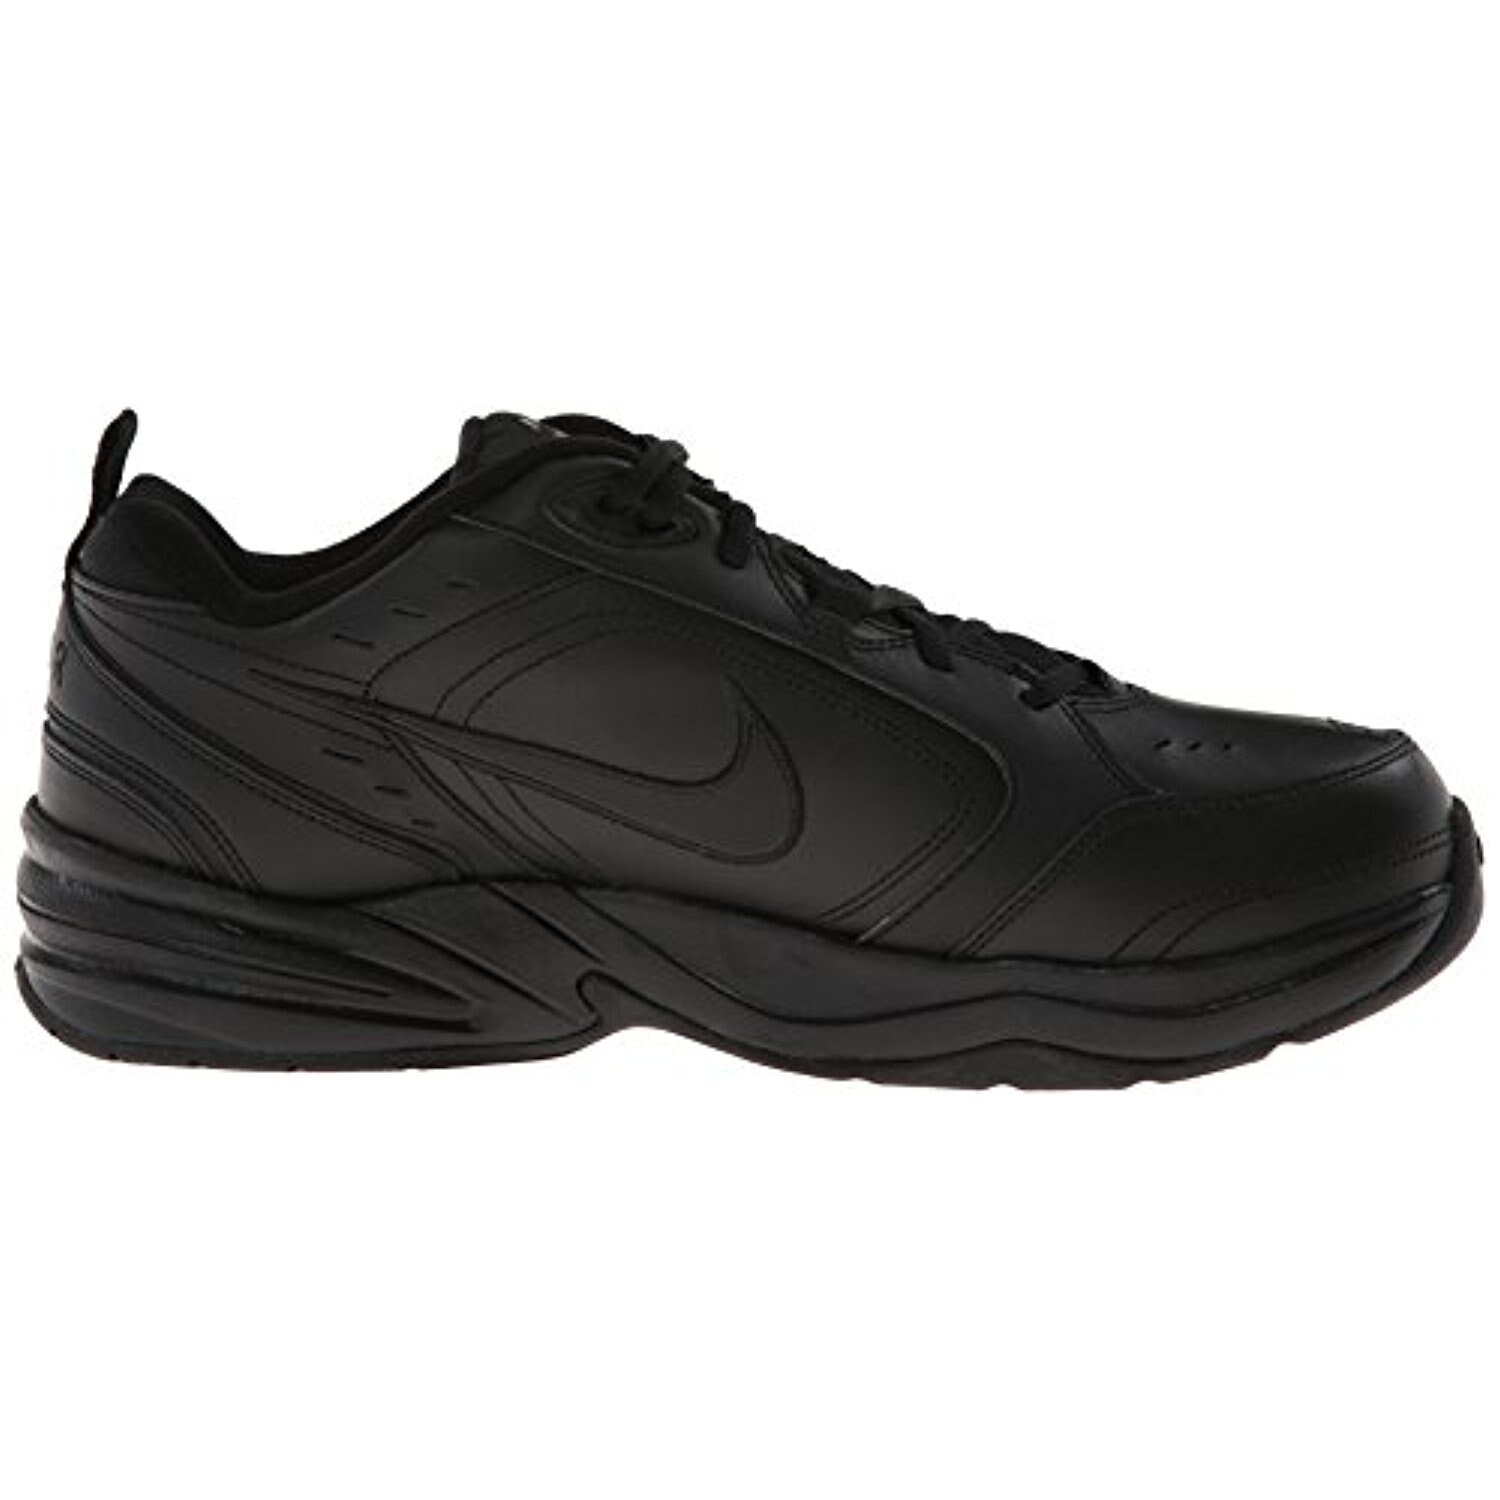 Nike Air Monarch Iv 4e Men S Training Shoe 10 5 4e Extra Wide Black Black Black Black Overstock